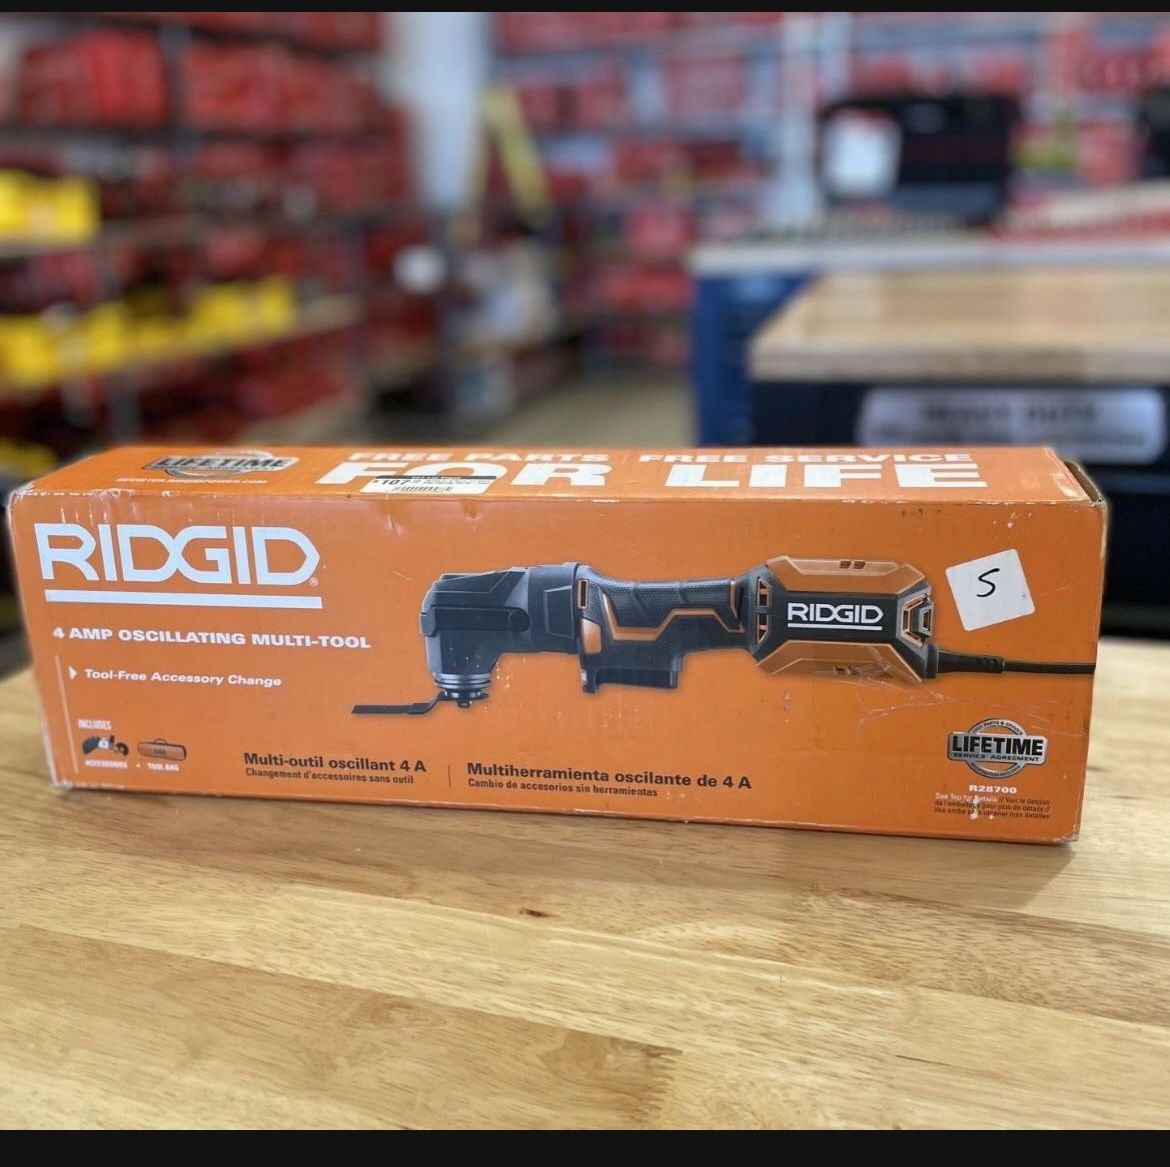 RIDGID Amp Corded Oscillating Multi-Tool R28700 for Sale in Las Vegas, NV  OfferUp